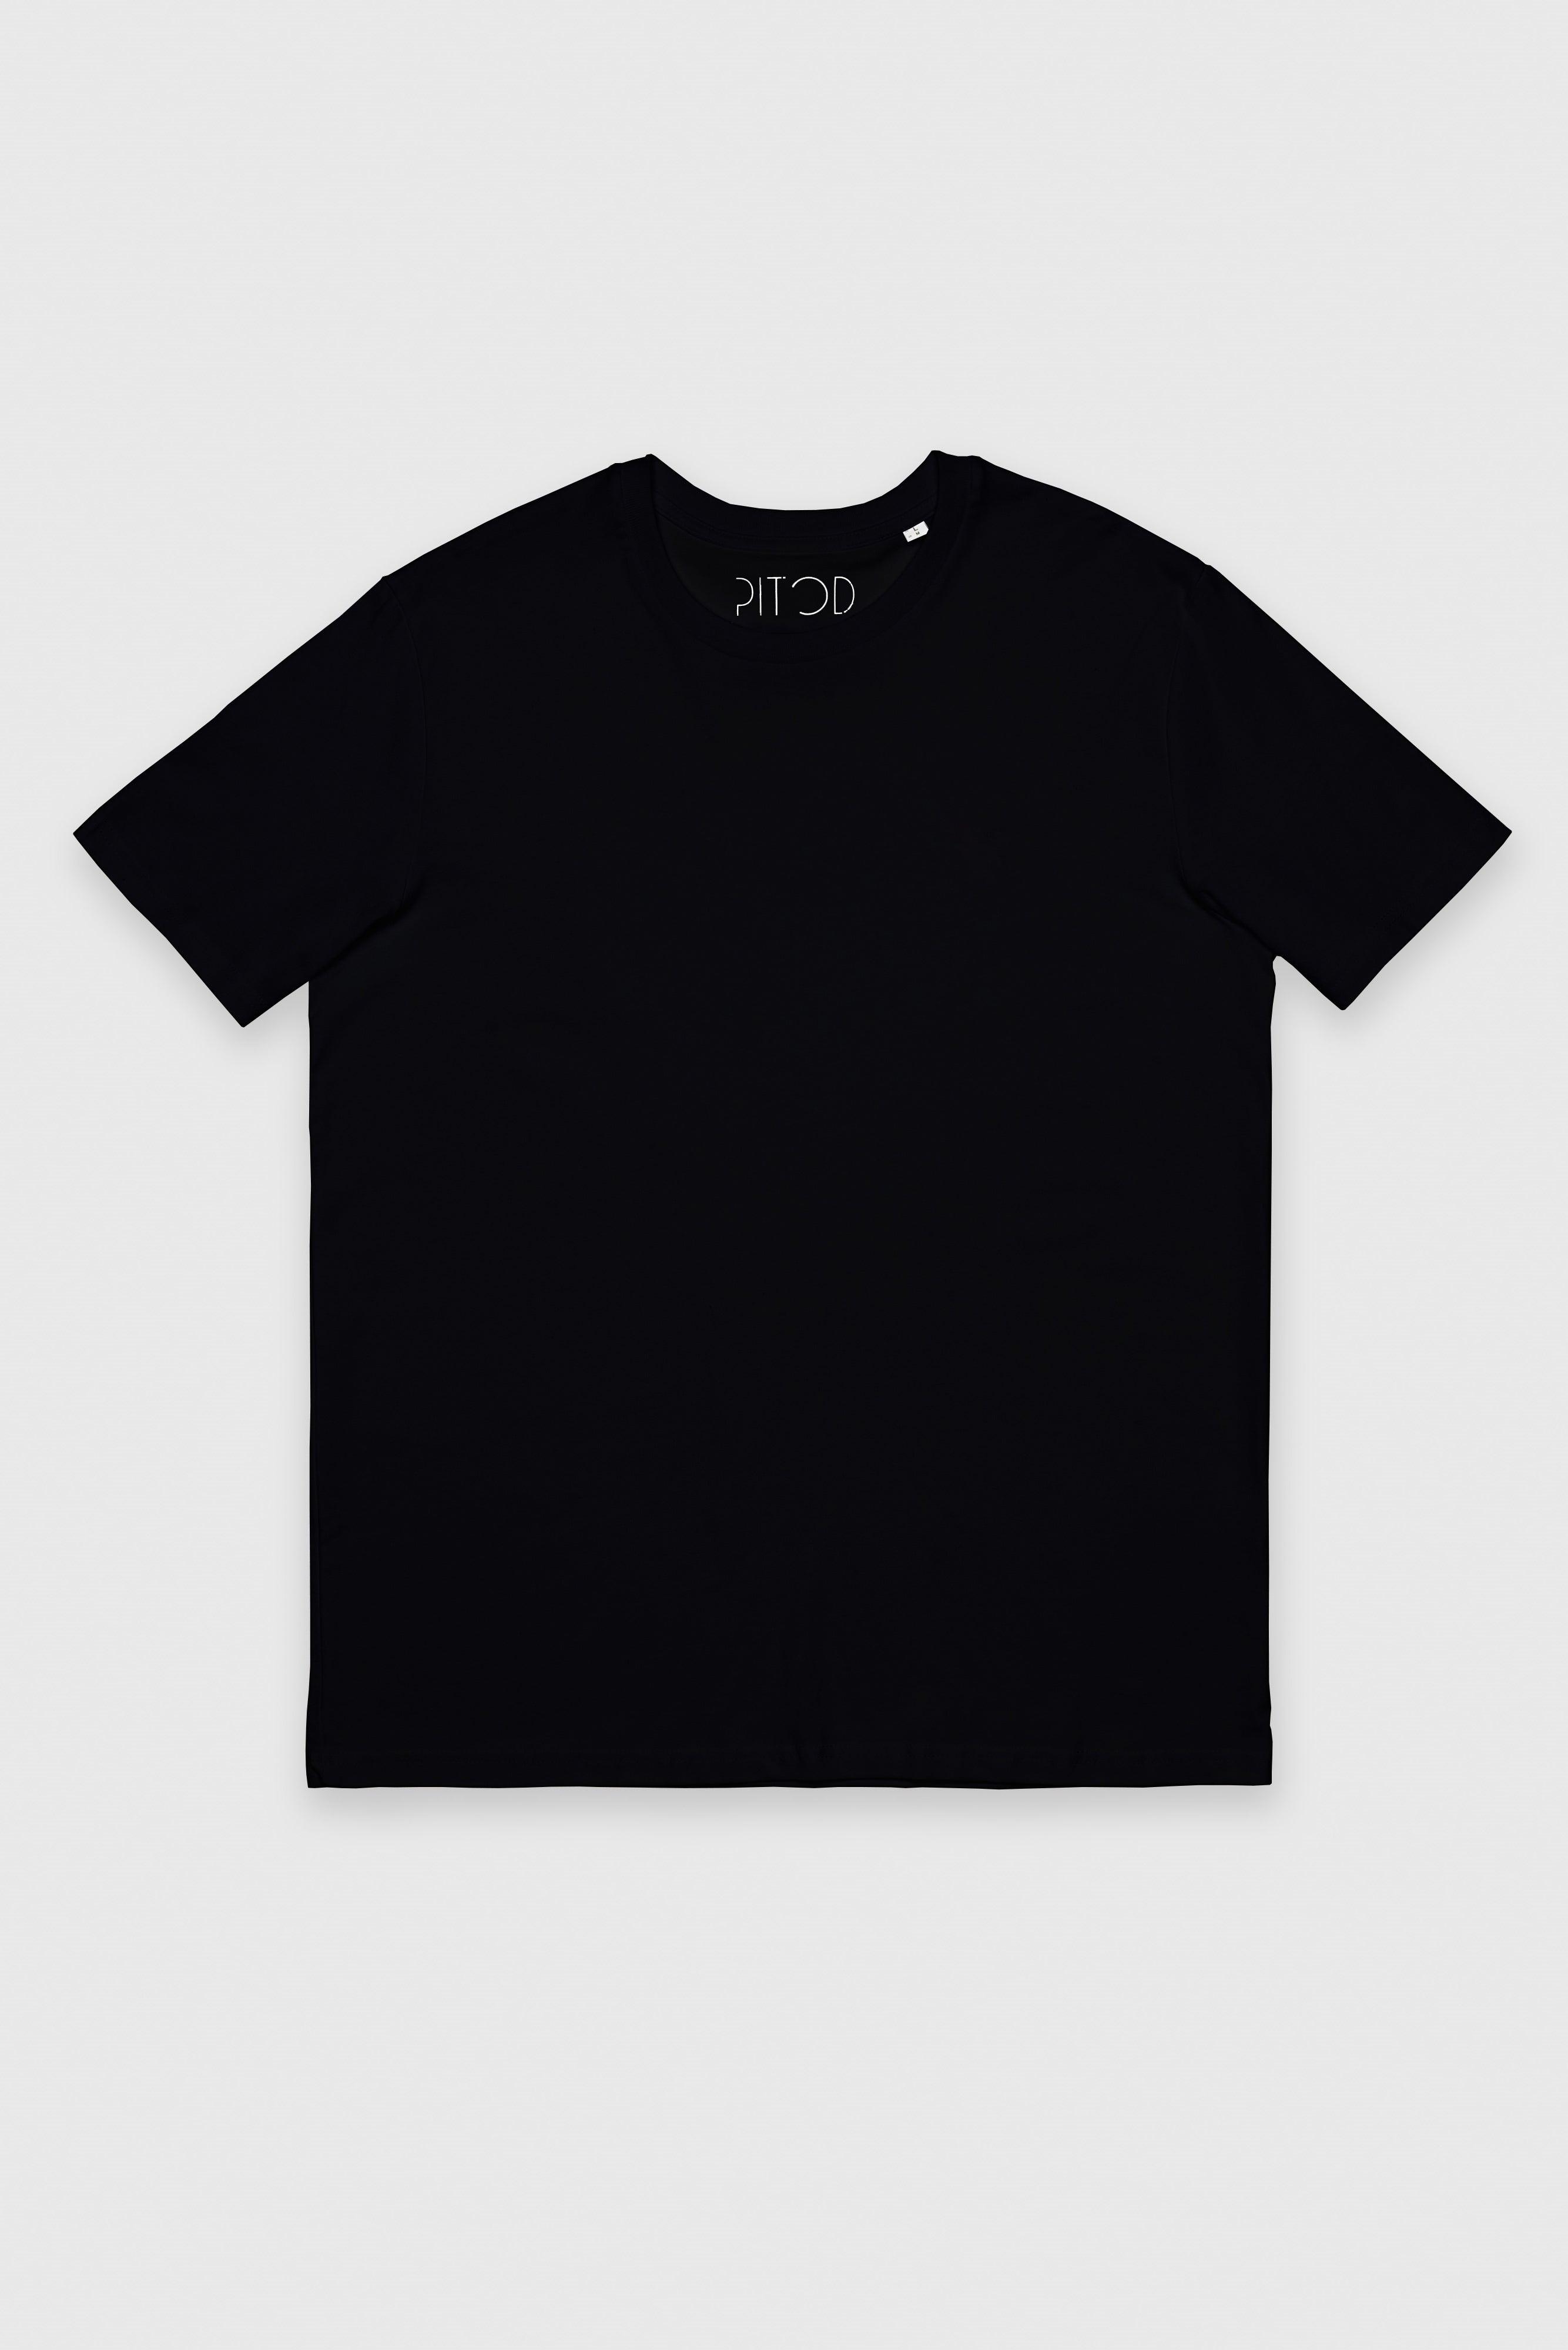 Pitod T-Shirt - 5 Pack